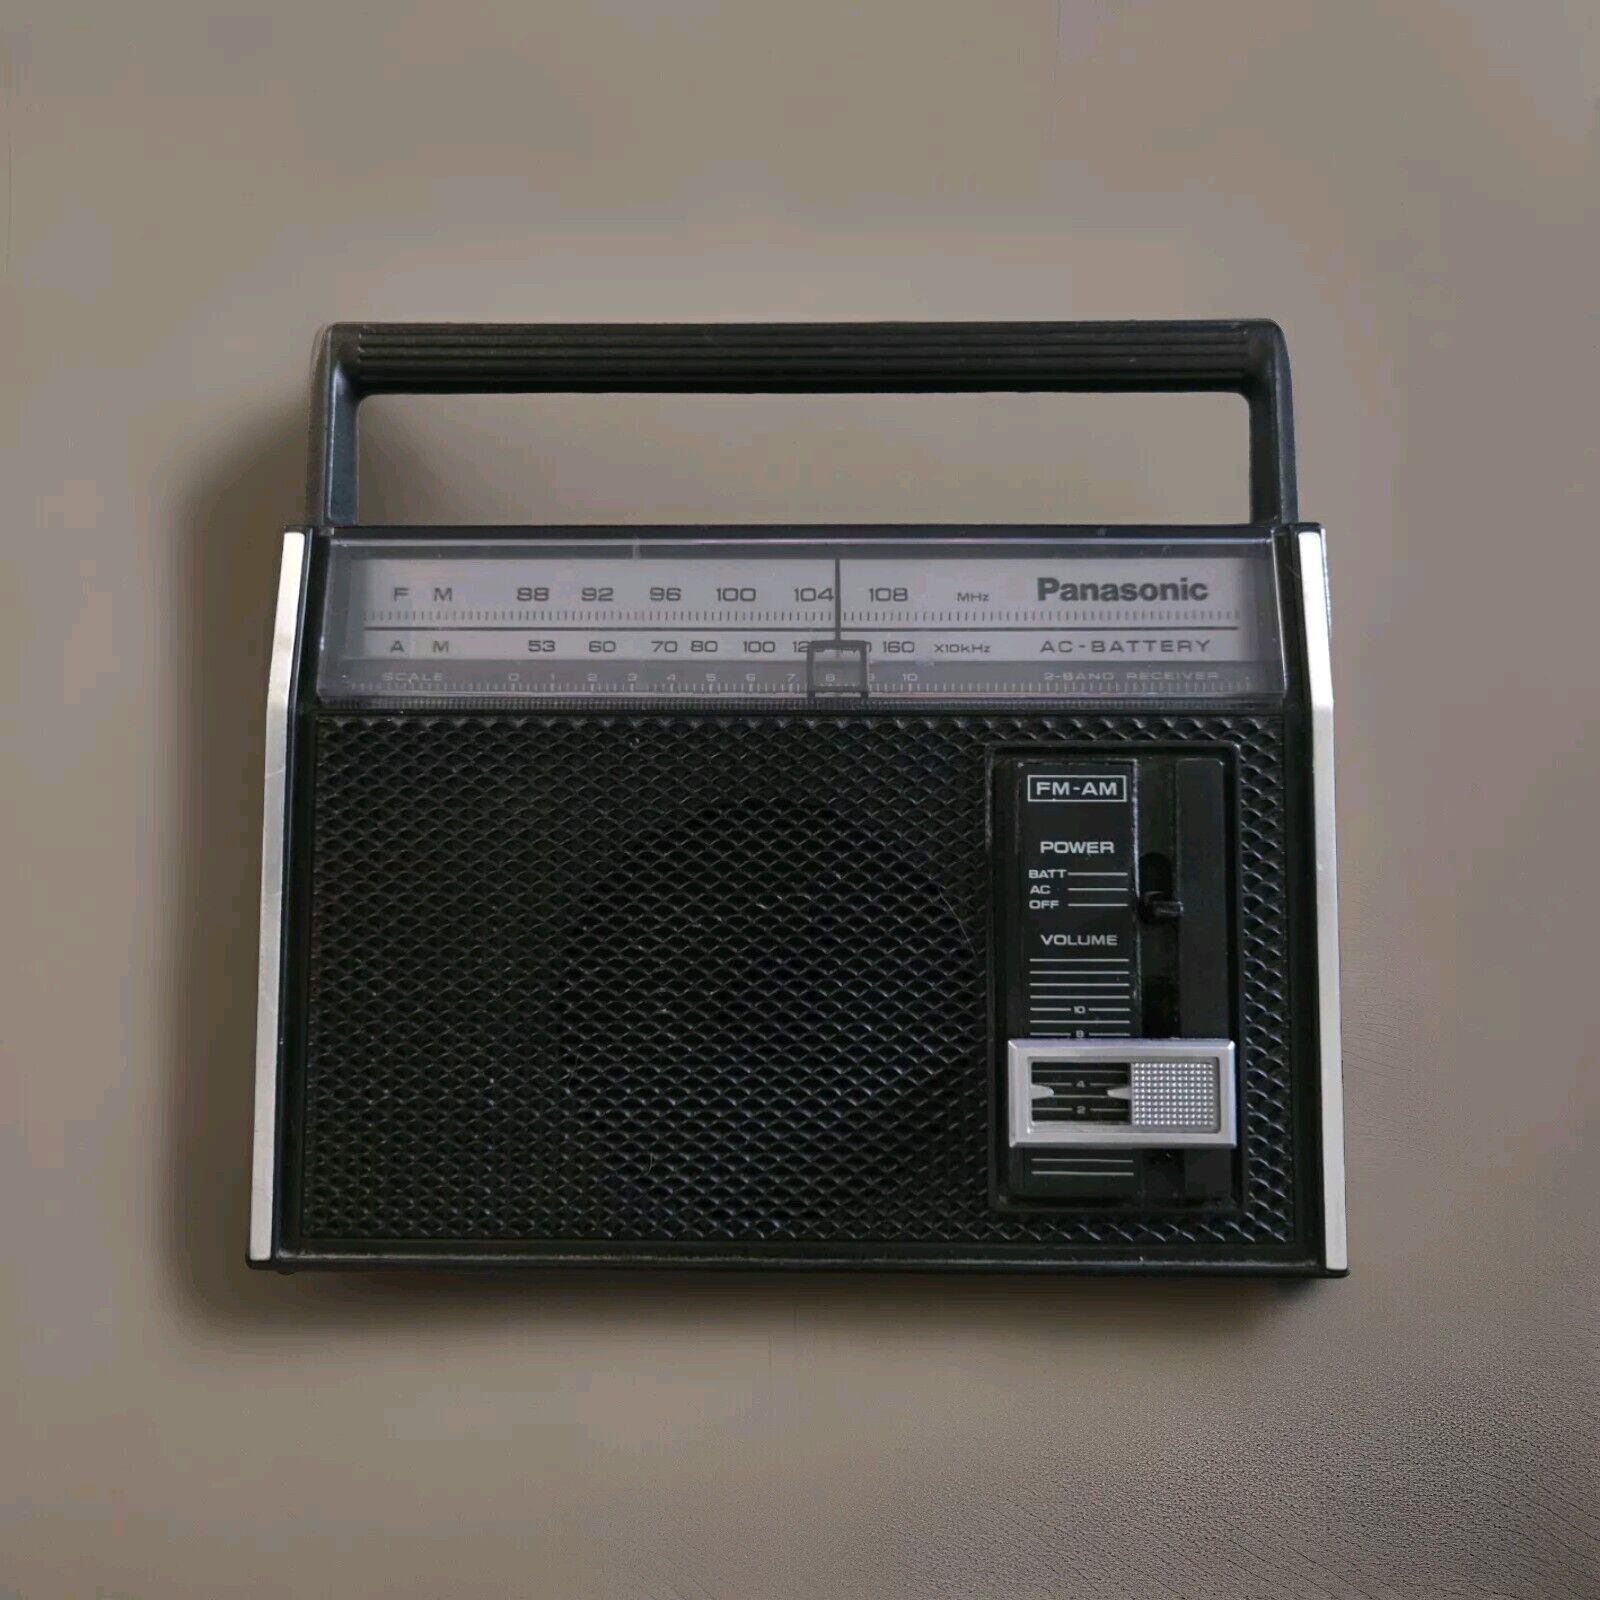 Vintage Panasonic AM-FM Radio AC-Battery 2-Band Receiver Model RF537 Works